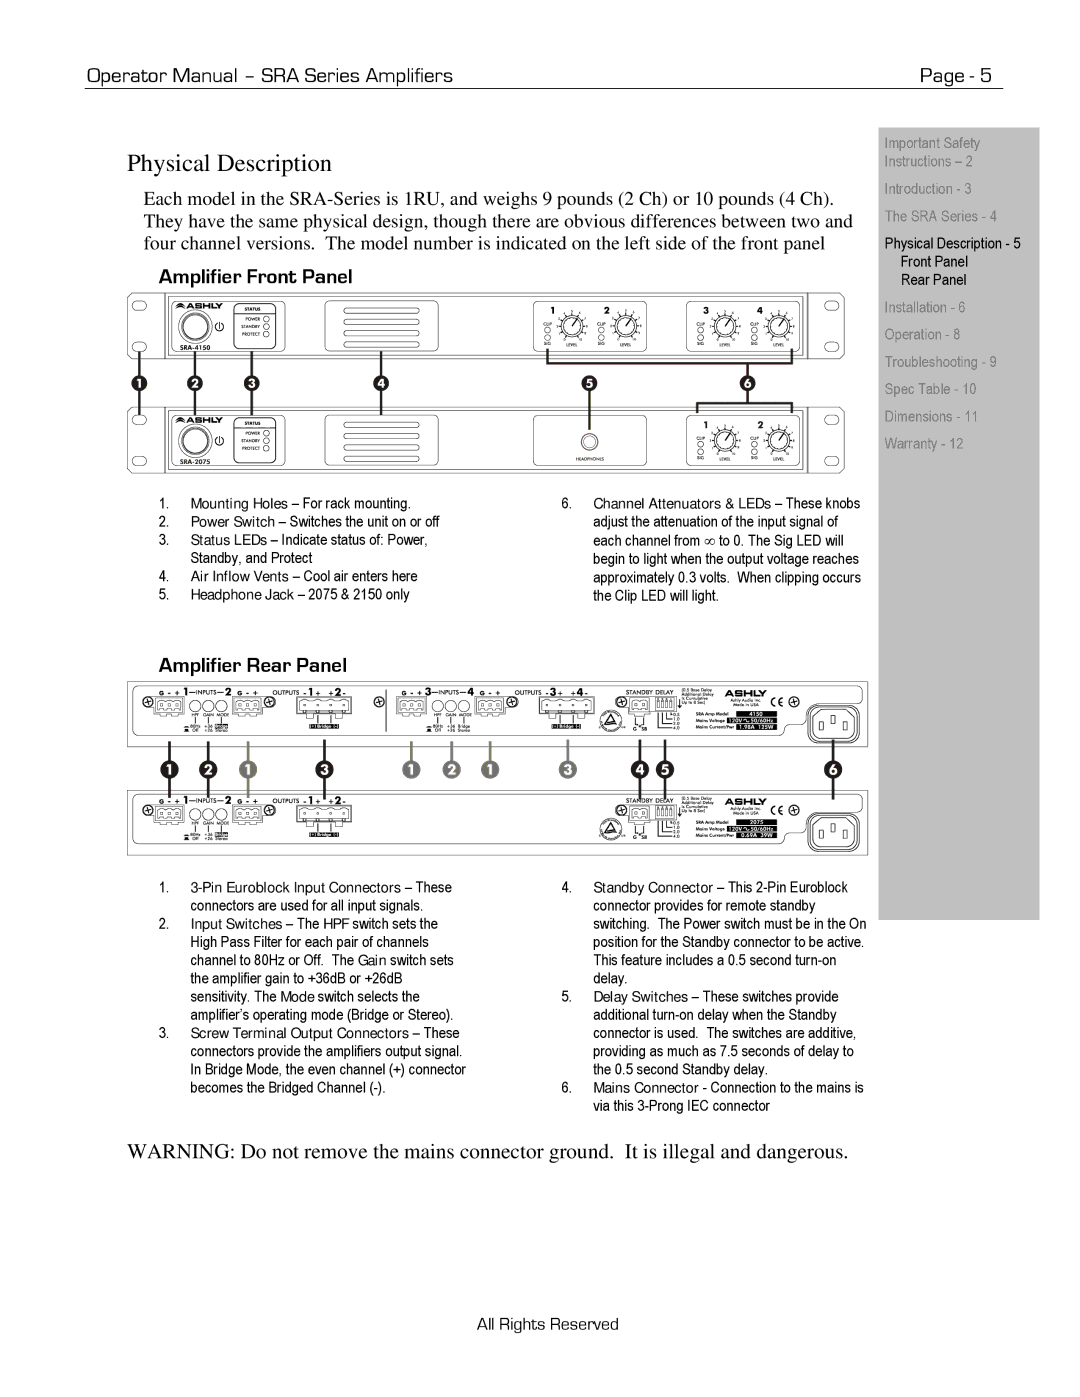 Ashly R-052510 manual Physical Description, Amplifier Front Panel, Amplifier Rear Panel 